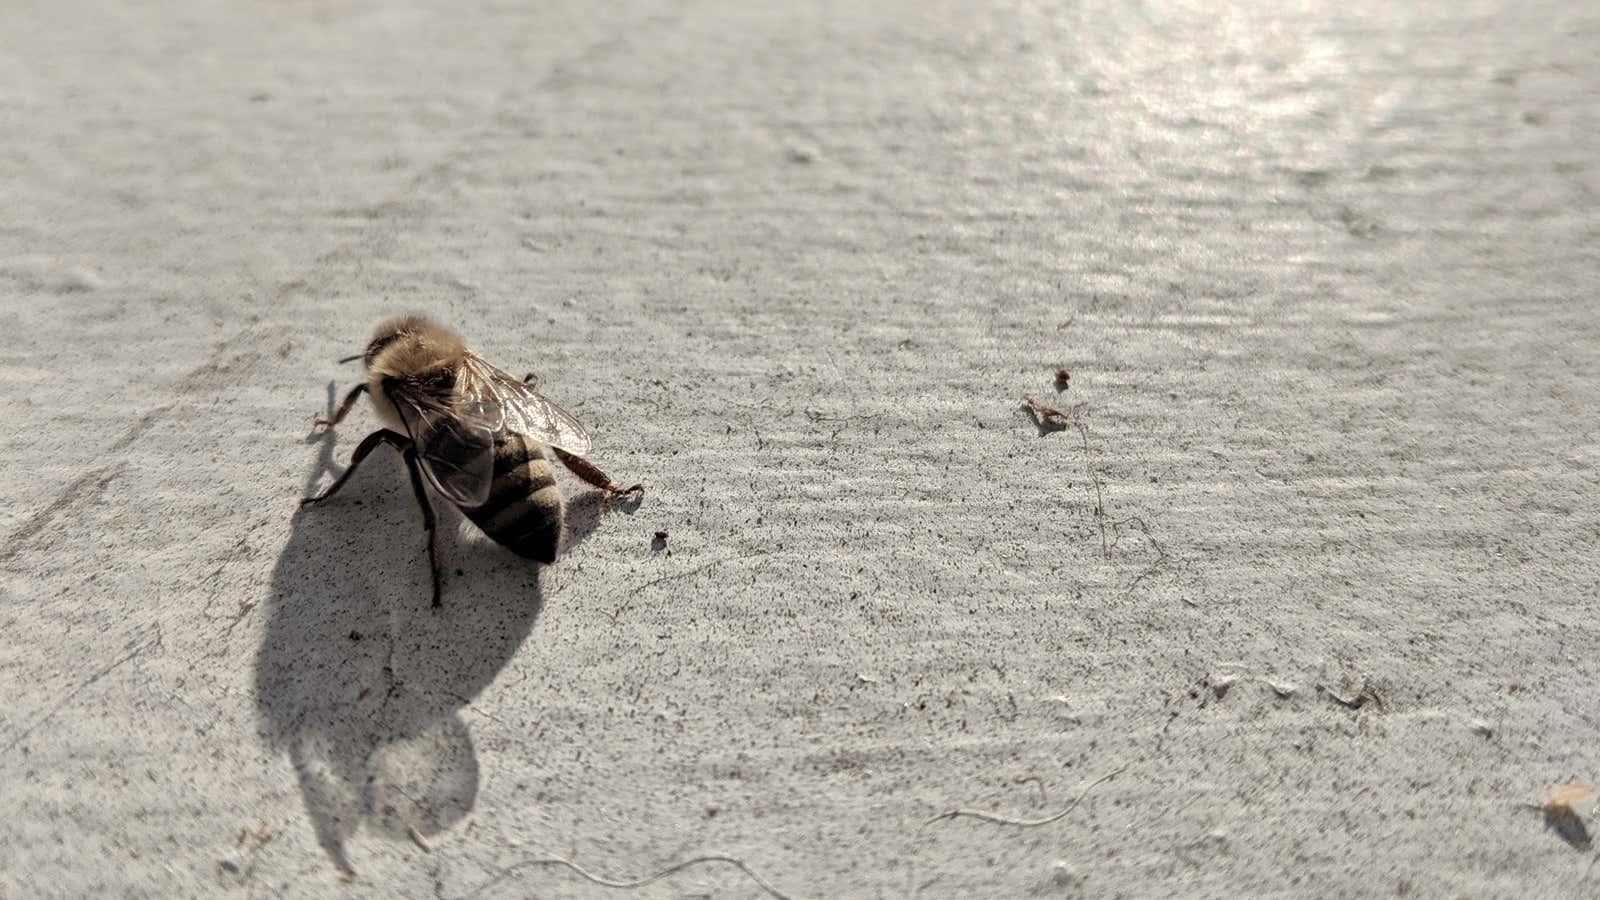 A lone pollinator